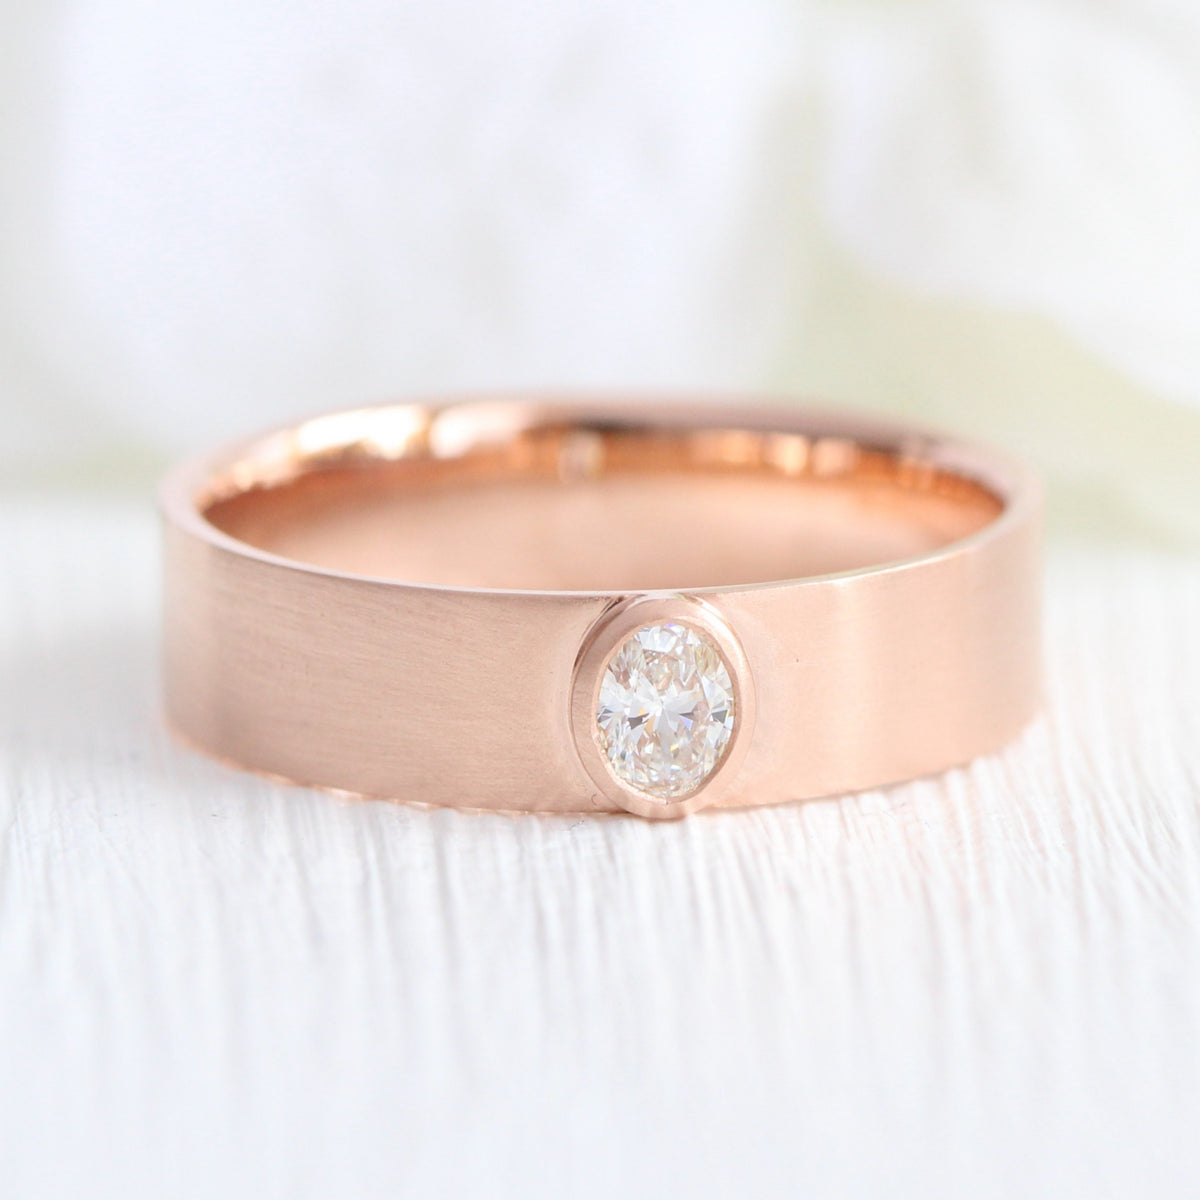 Oval diamond wedding ring rose gold diamond wide wedding band for him la more design jewelry